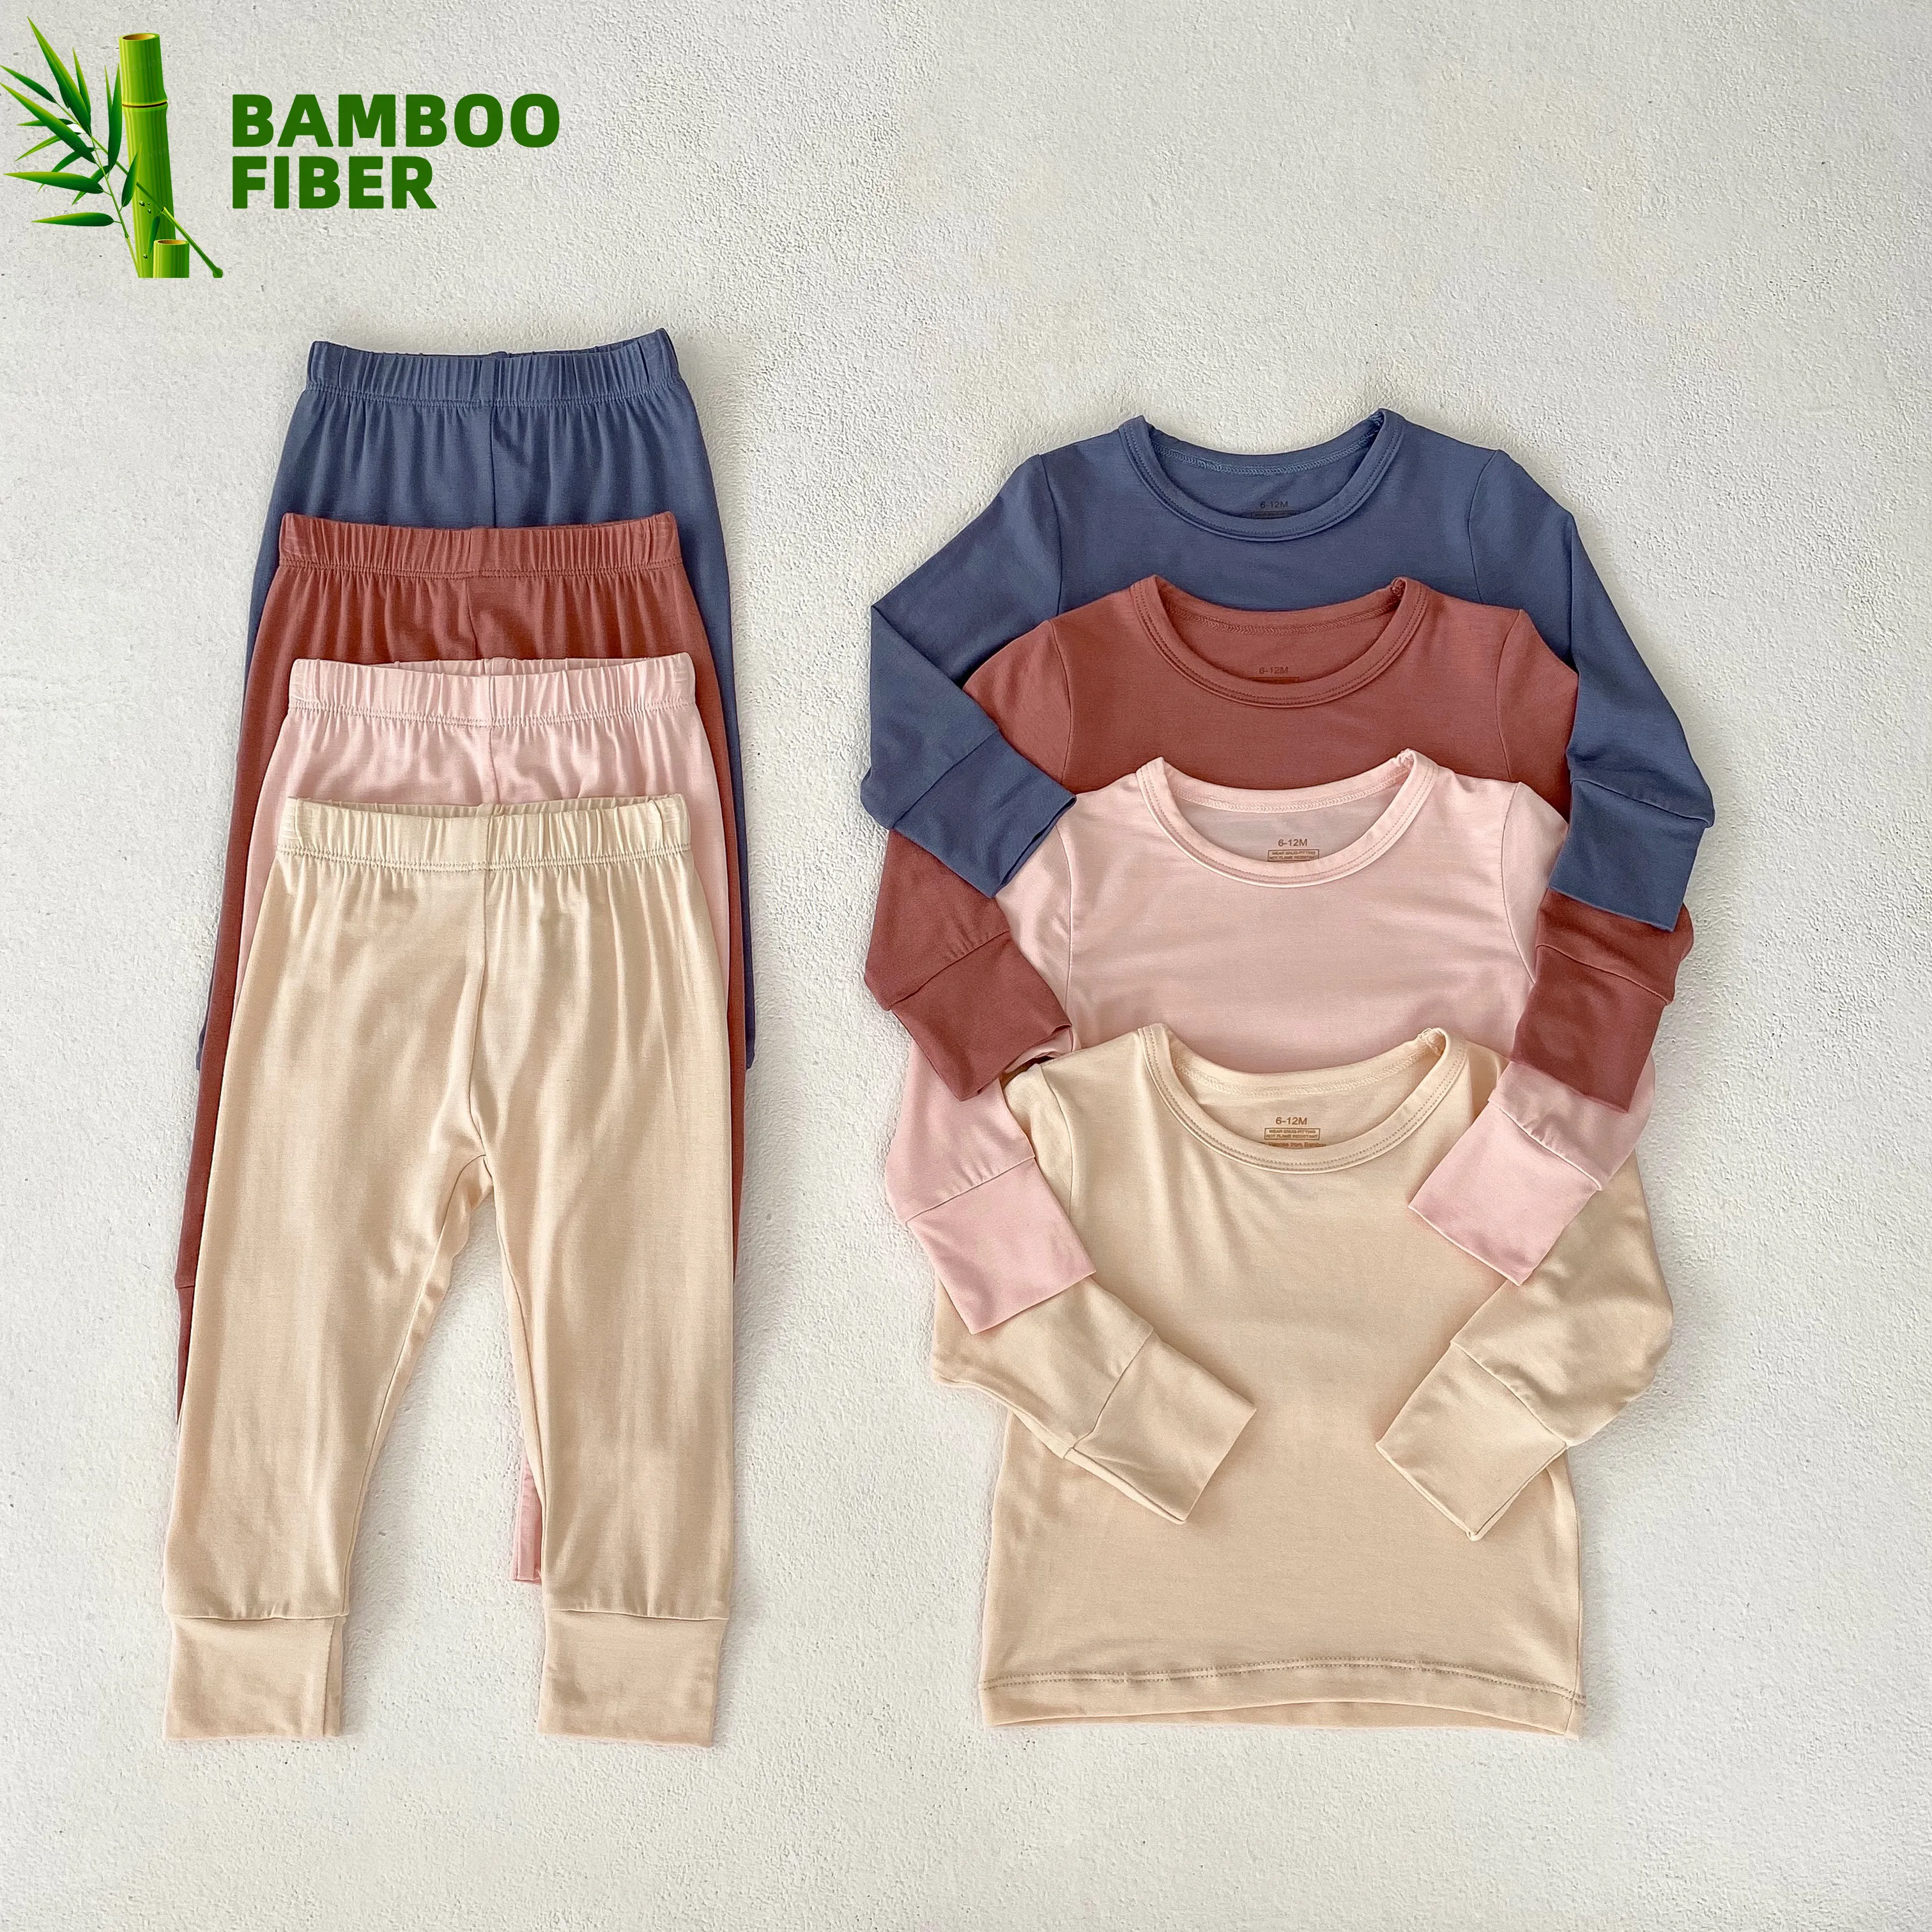 Engepapa bamboo baby pajamas clothing set Baby Clothes Solid Color suit boy and girl bamboo pajamas